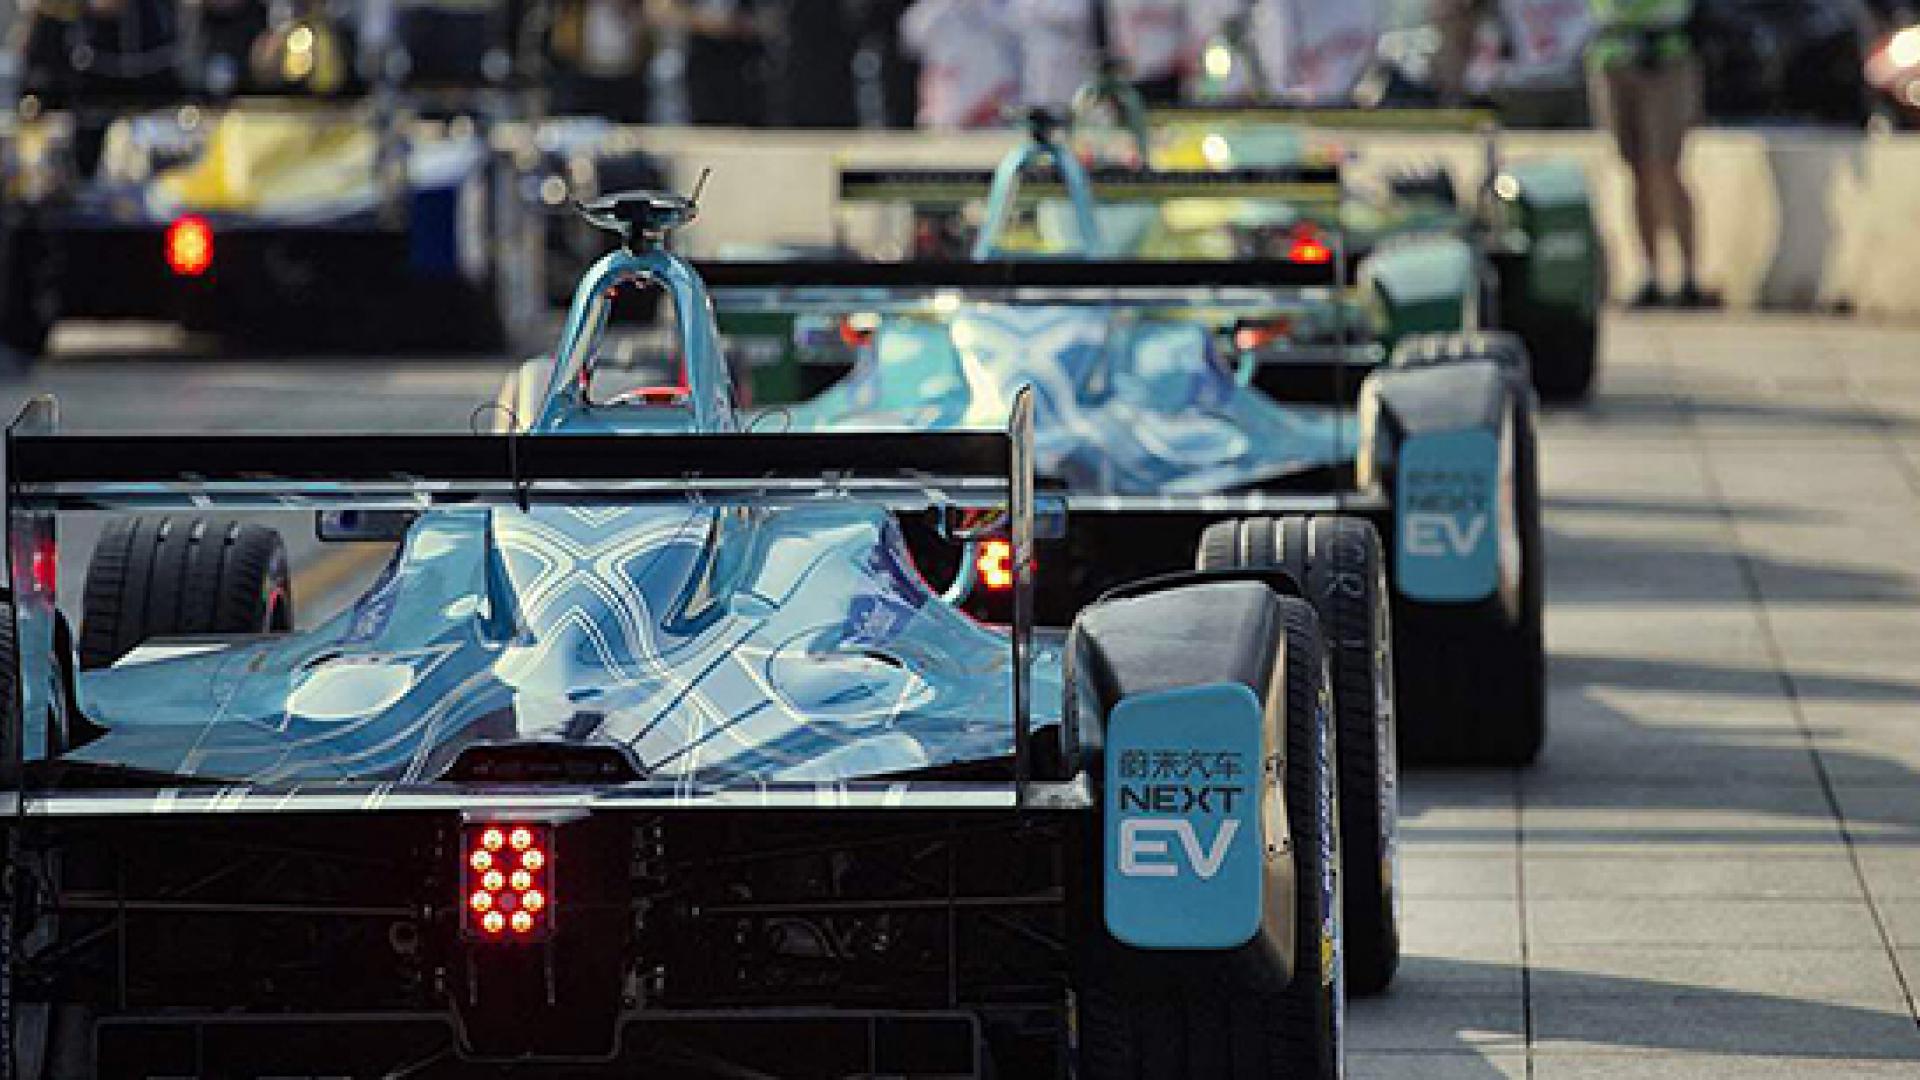 FIA Formula E new season